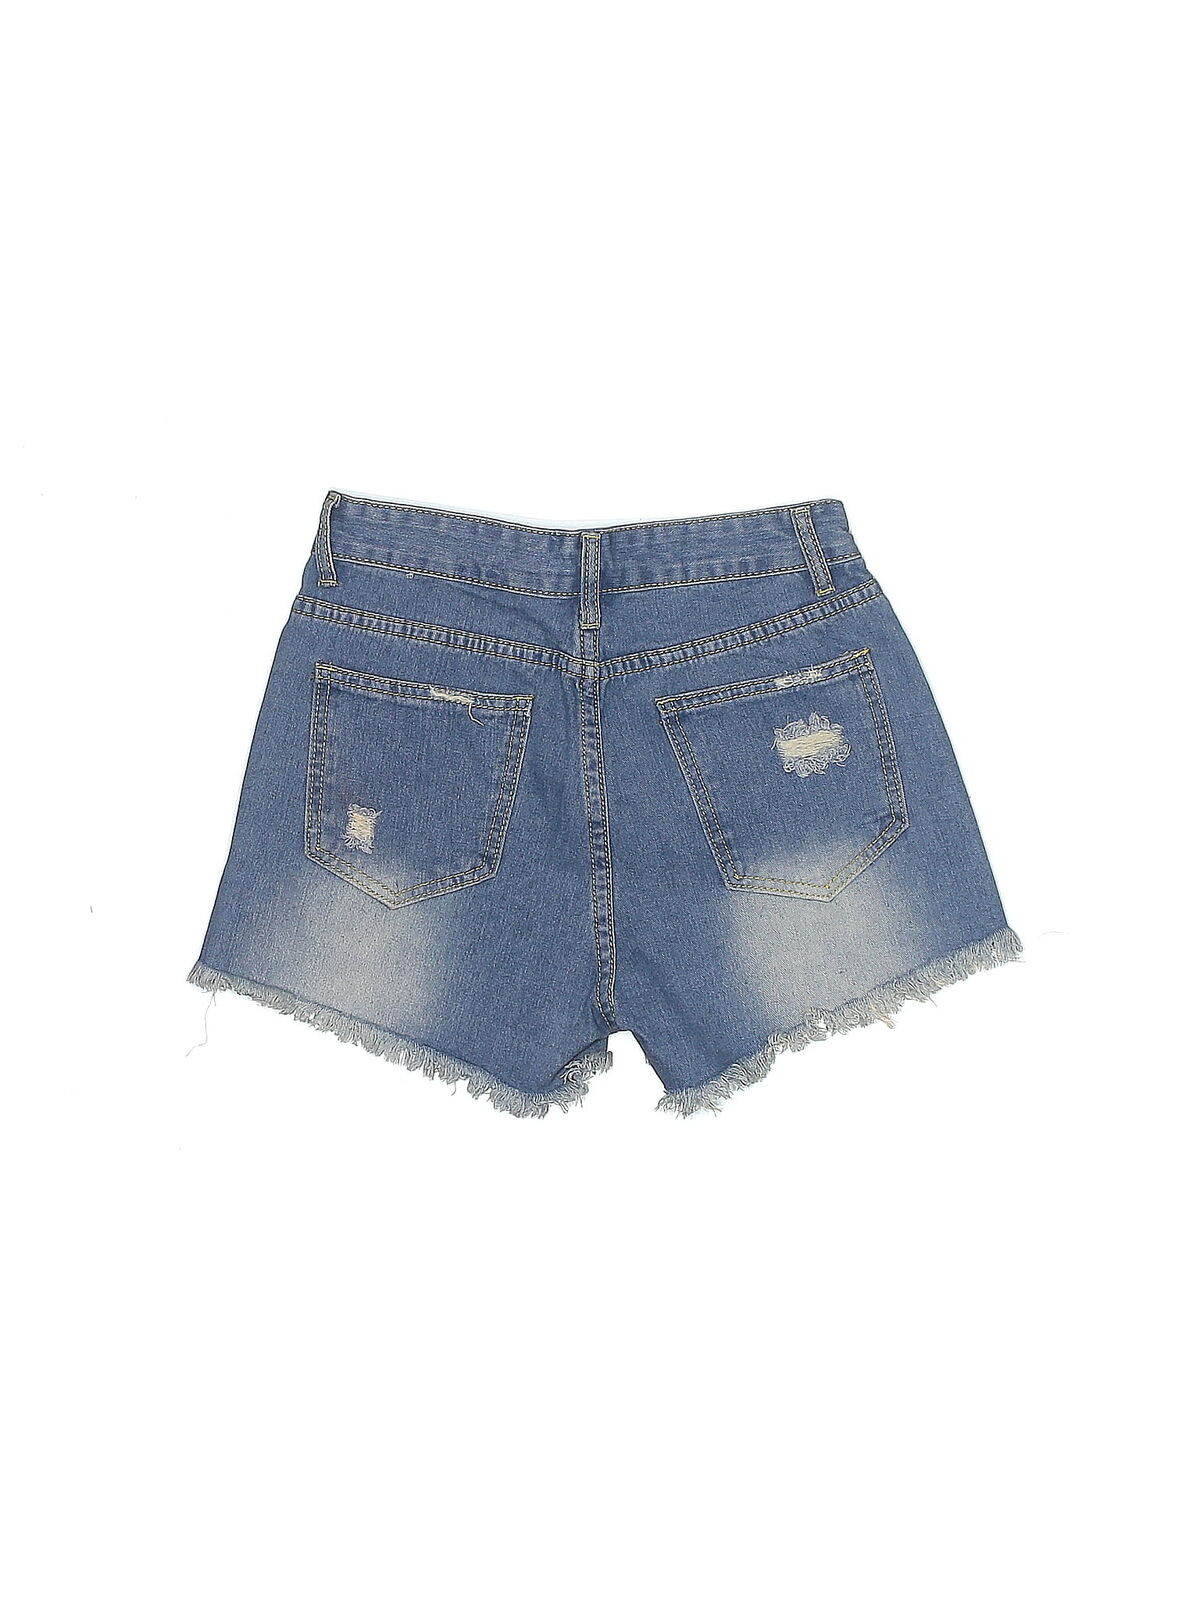 Unbranded Women Blue Denim Shorts S - image 2